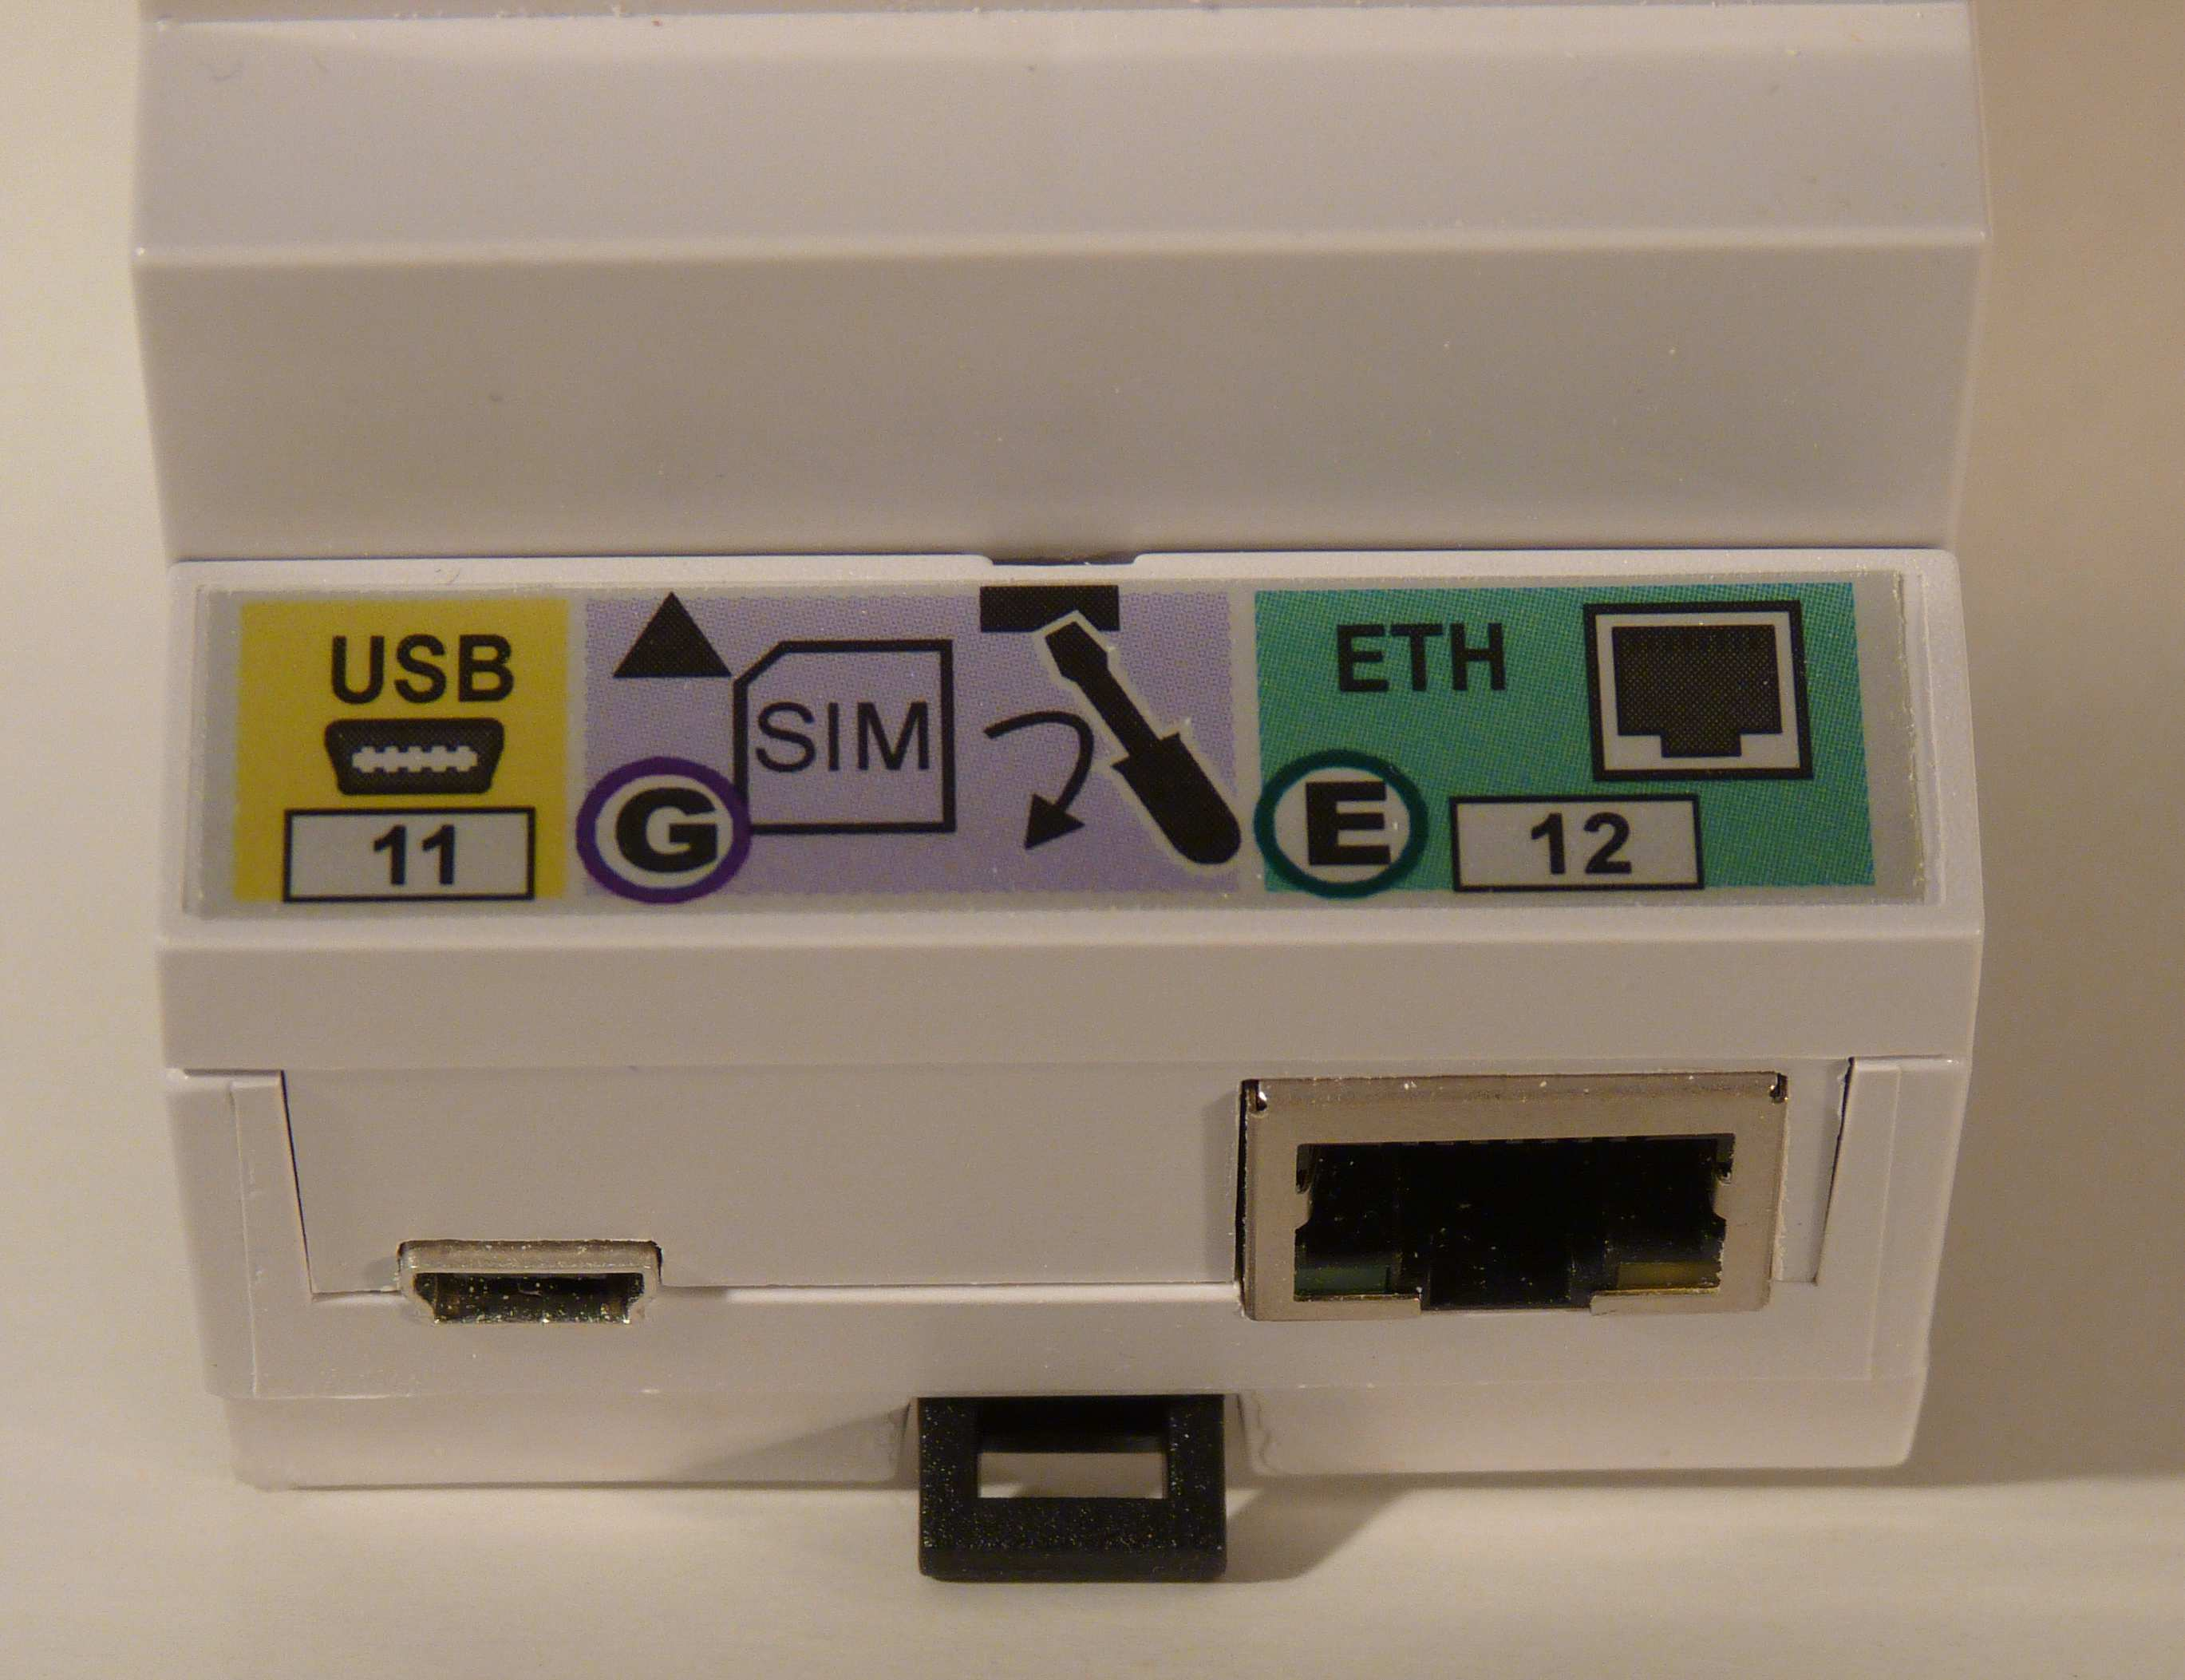 GSM signalizuje provoz na lince GSM/GPRS.